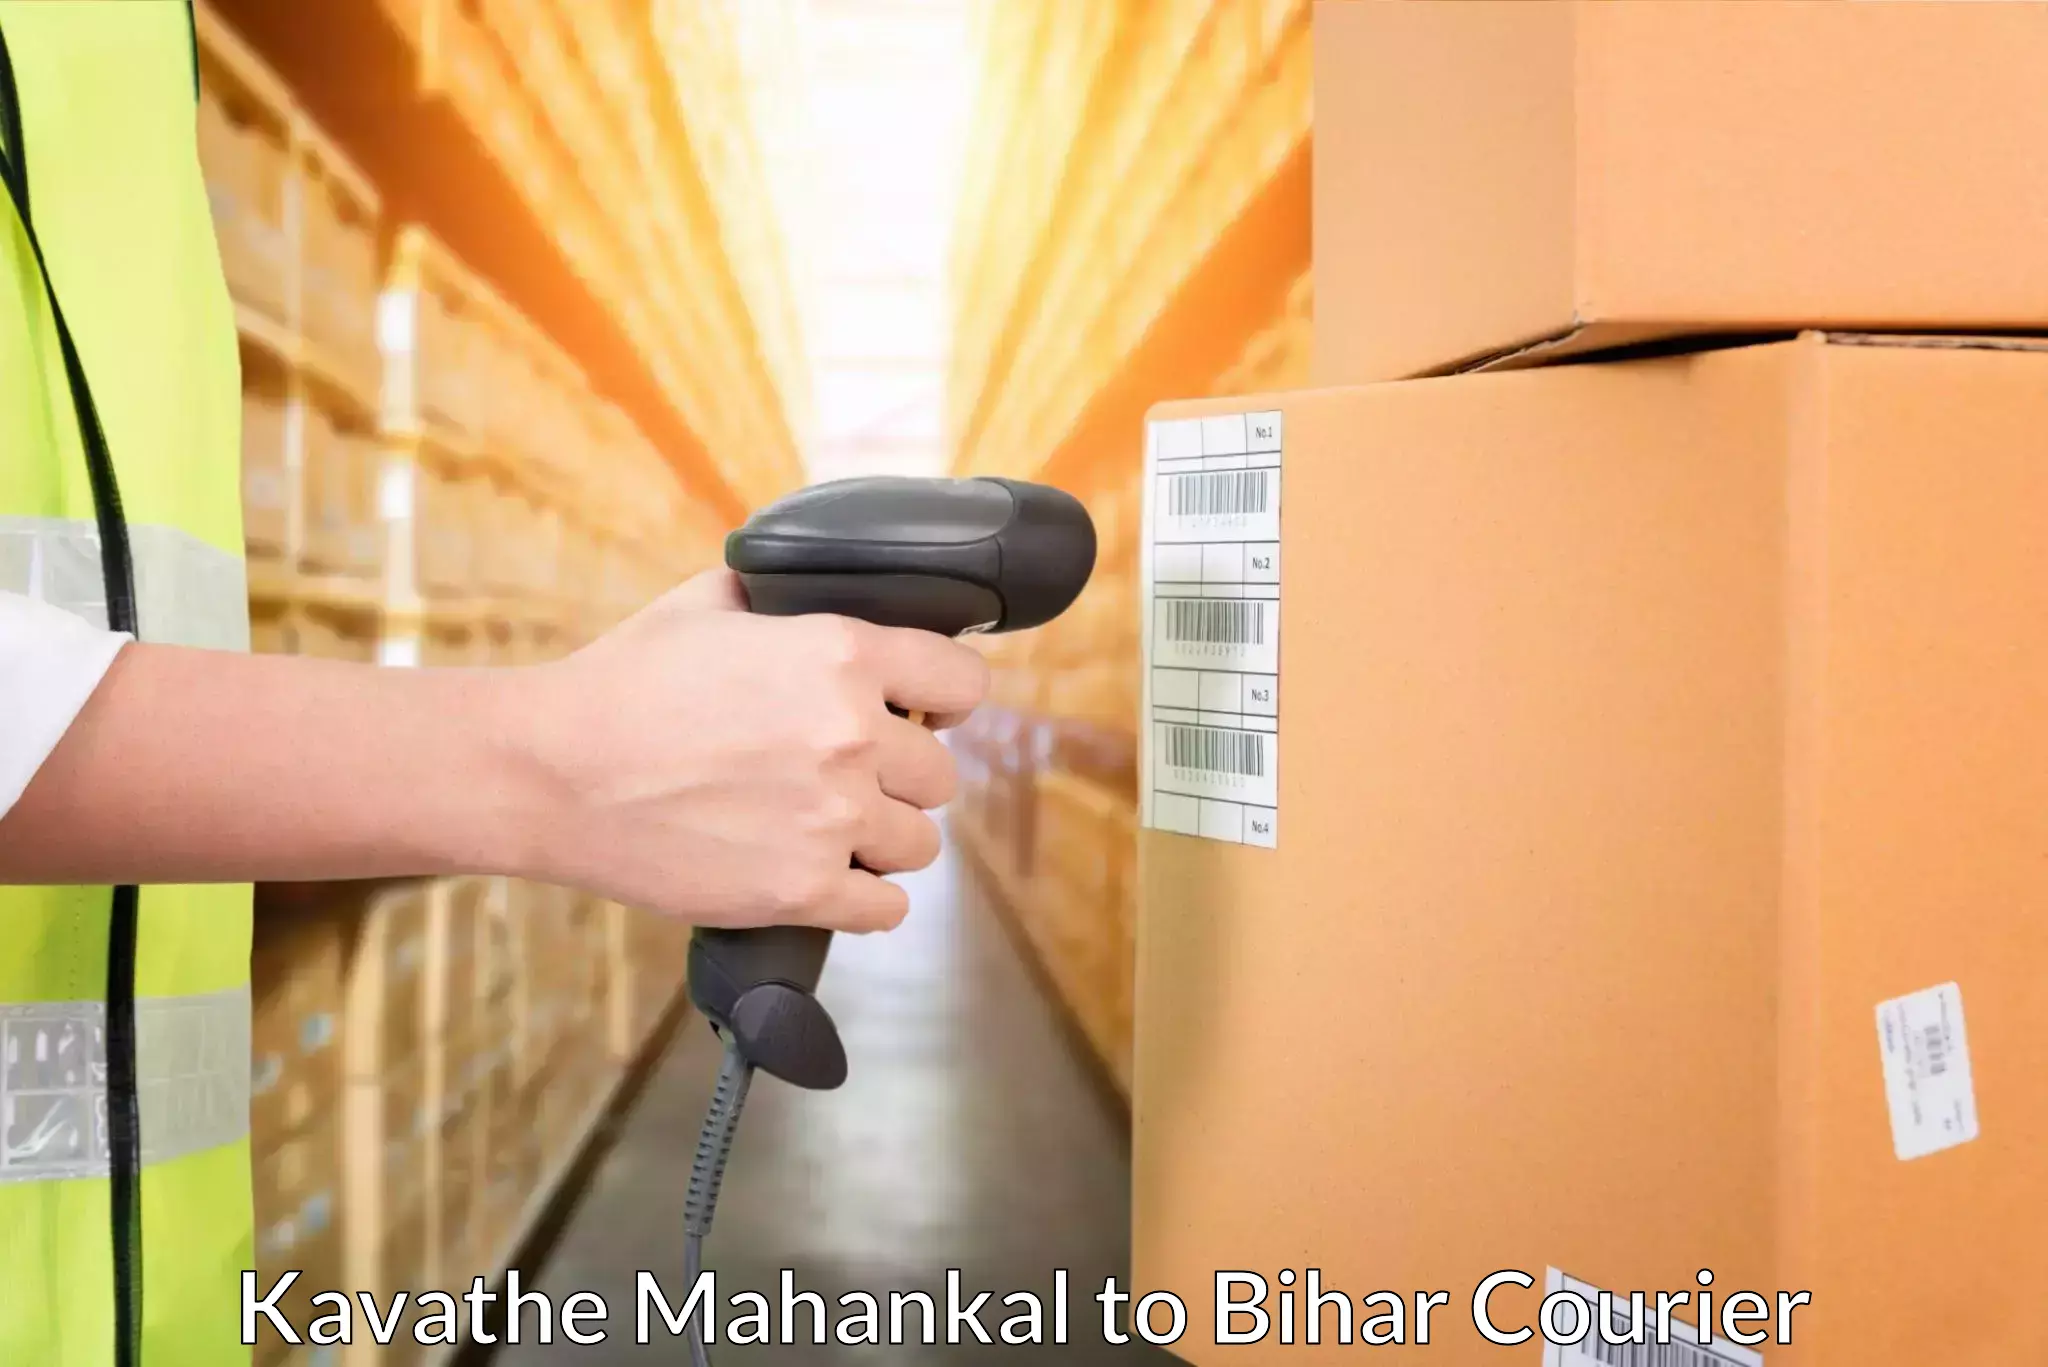 Speedy delivery service Kavathe Mahankal to Mahnar Bazar